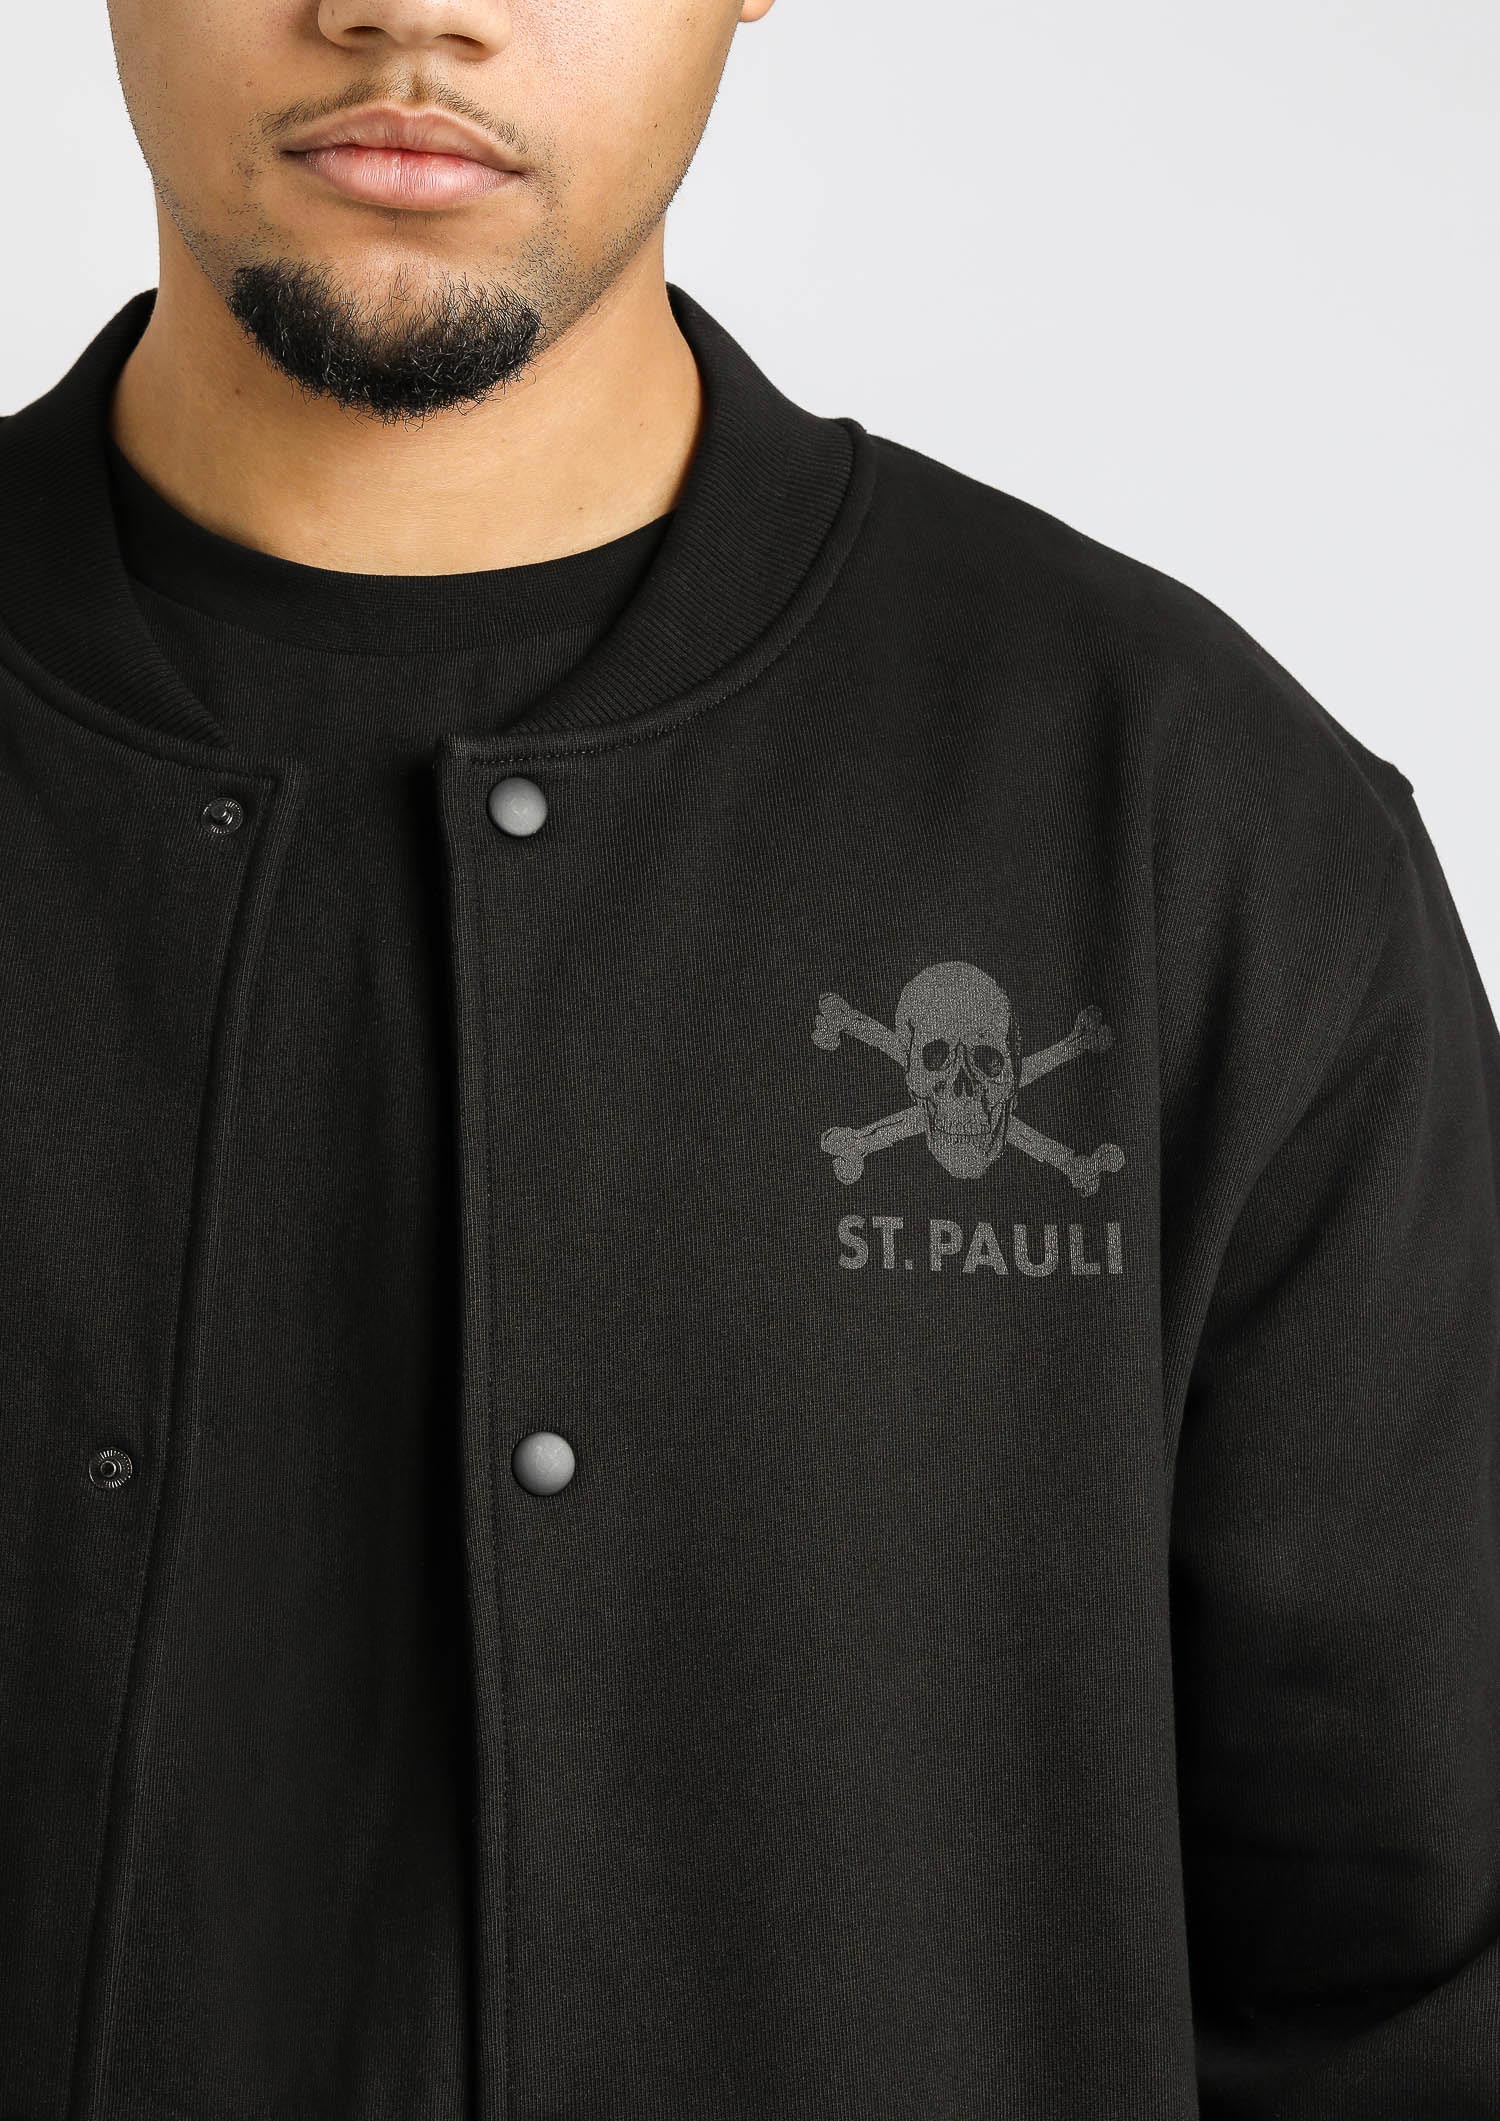 College Jacket "All Black" Skull and Crossbones 